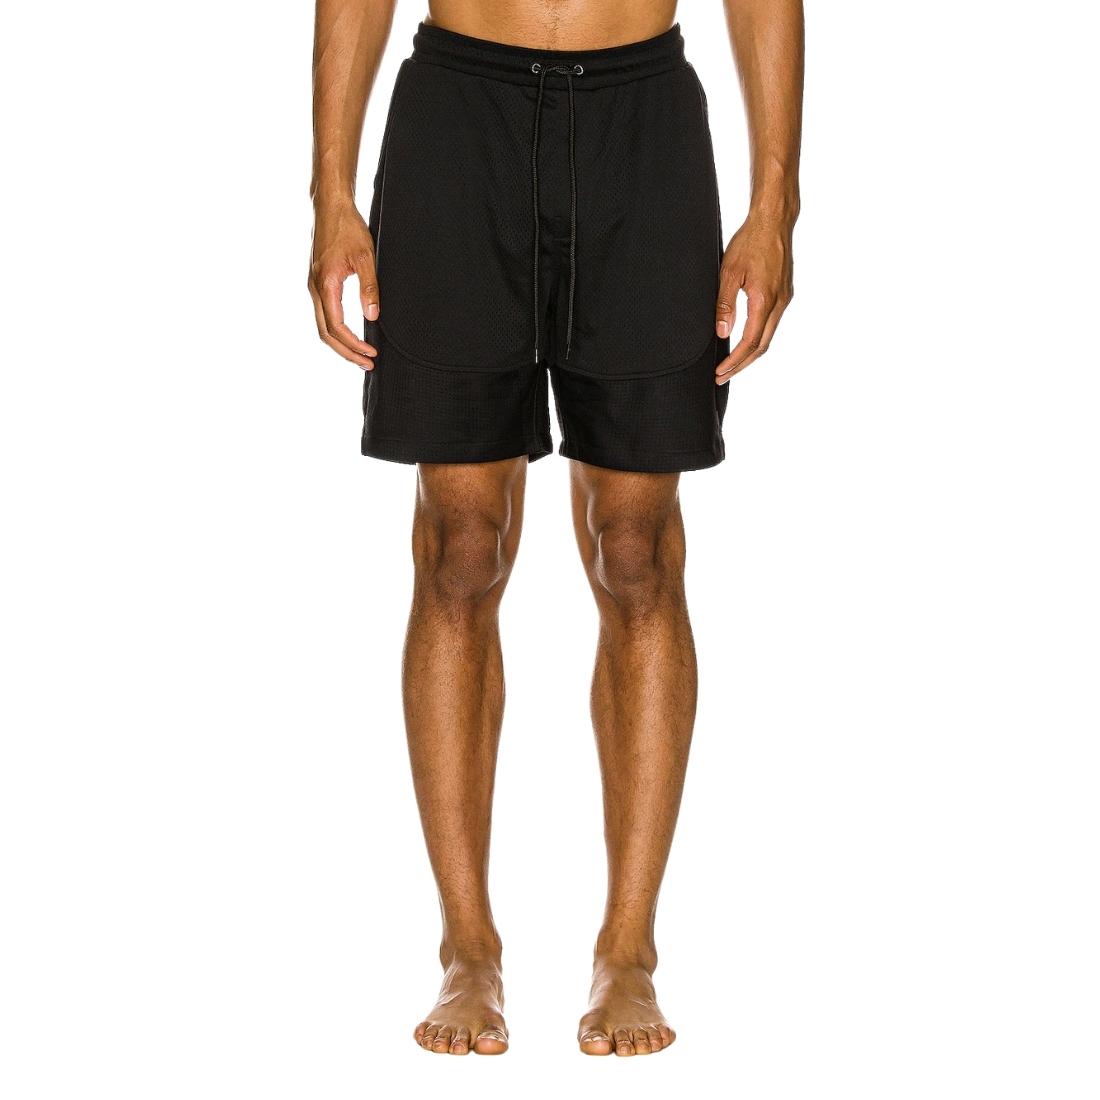 Brixton Shield Mesh Short - Black - Mens Gym Shorts by Brixton